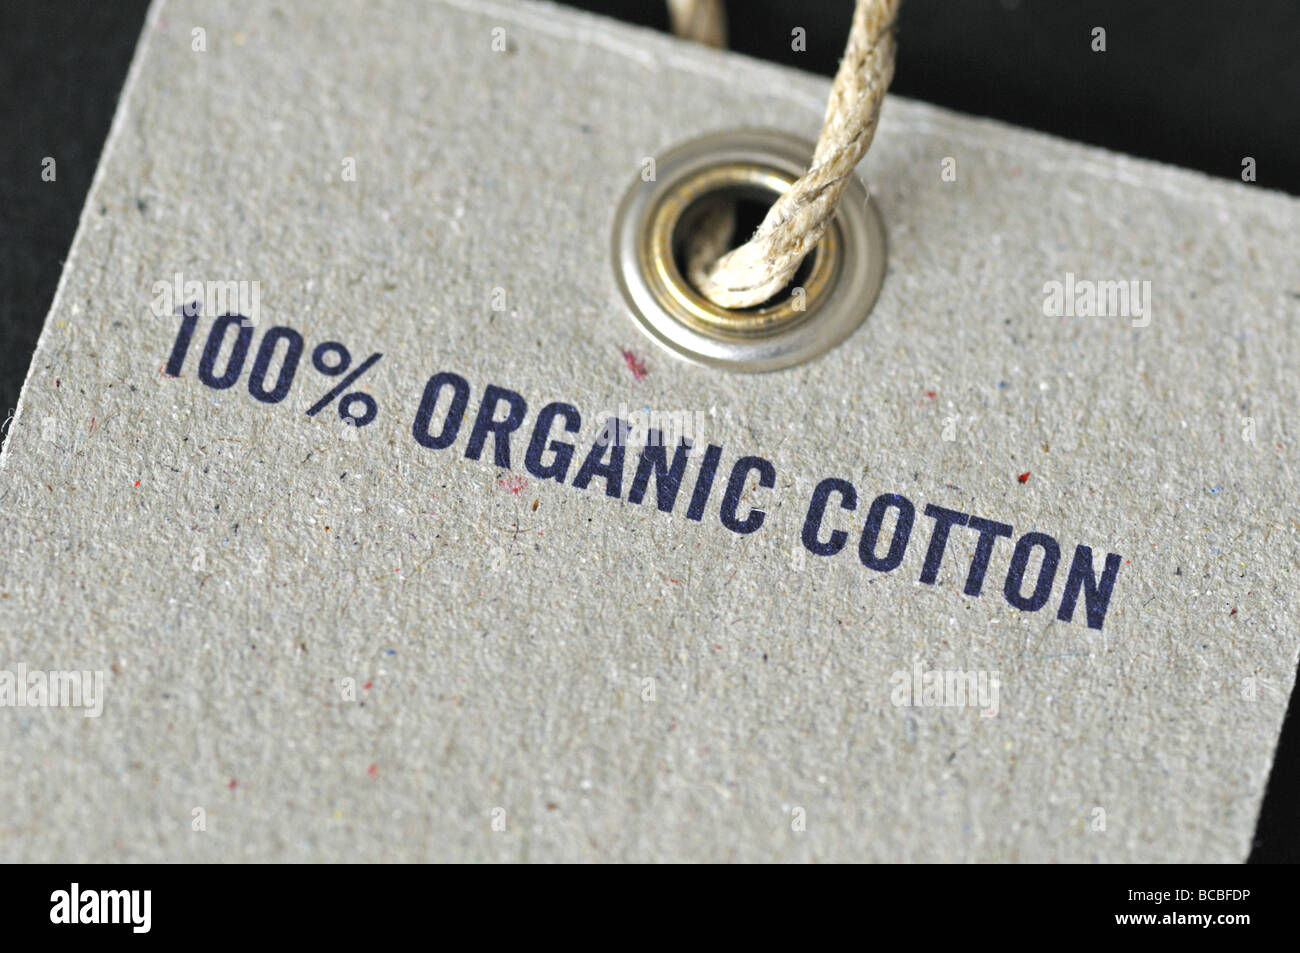 100 Organic Cotton printed on label Stock Photo